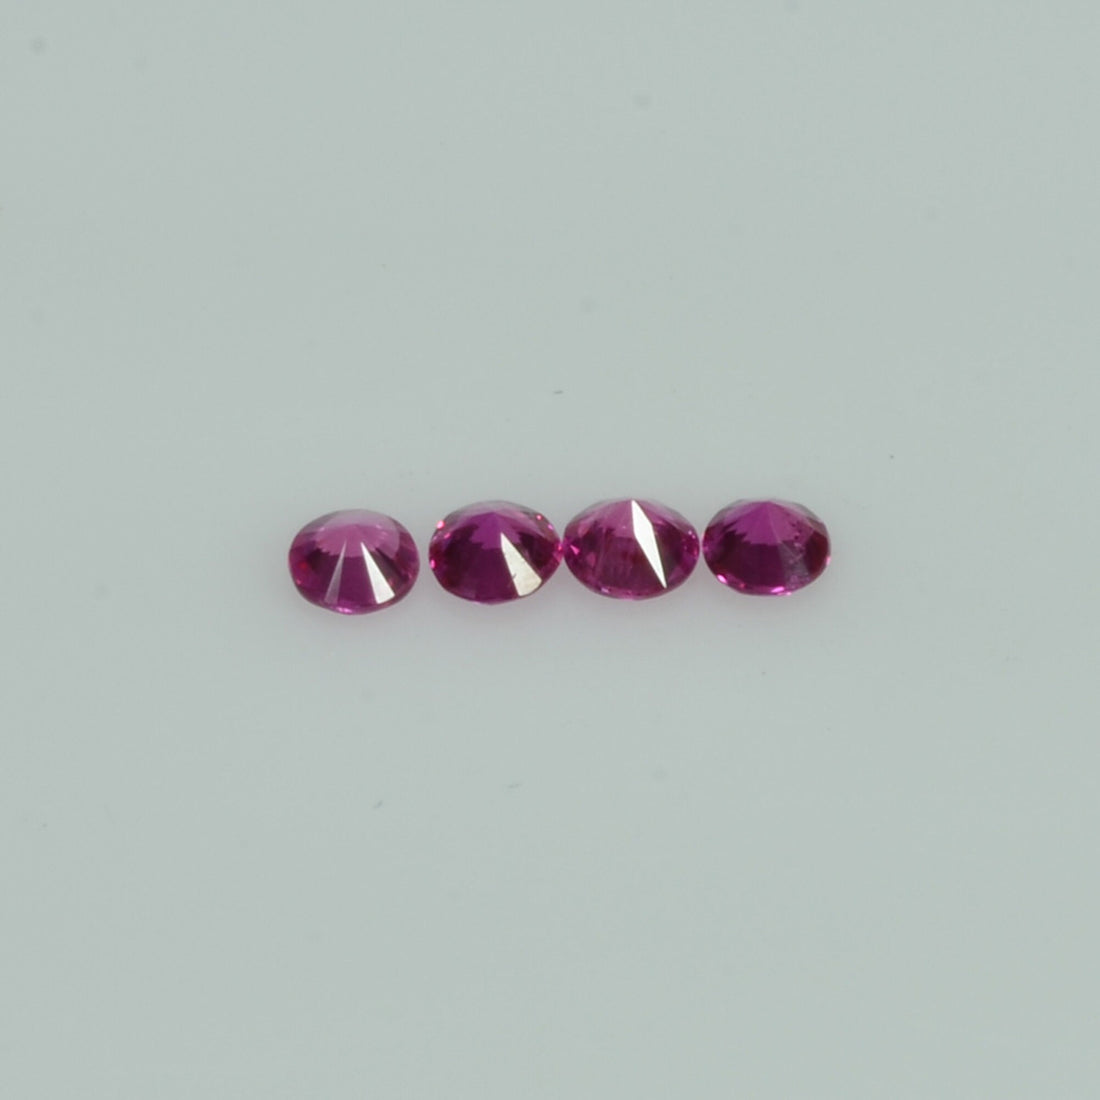 2.7-3.9 mm Natural Pink Sapphire Loose Gemstone Round Diamond Cut